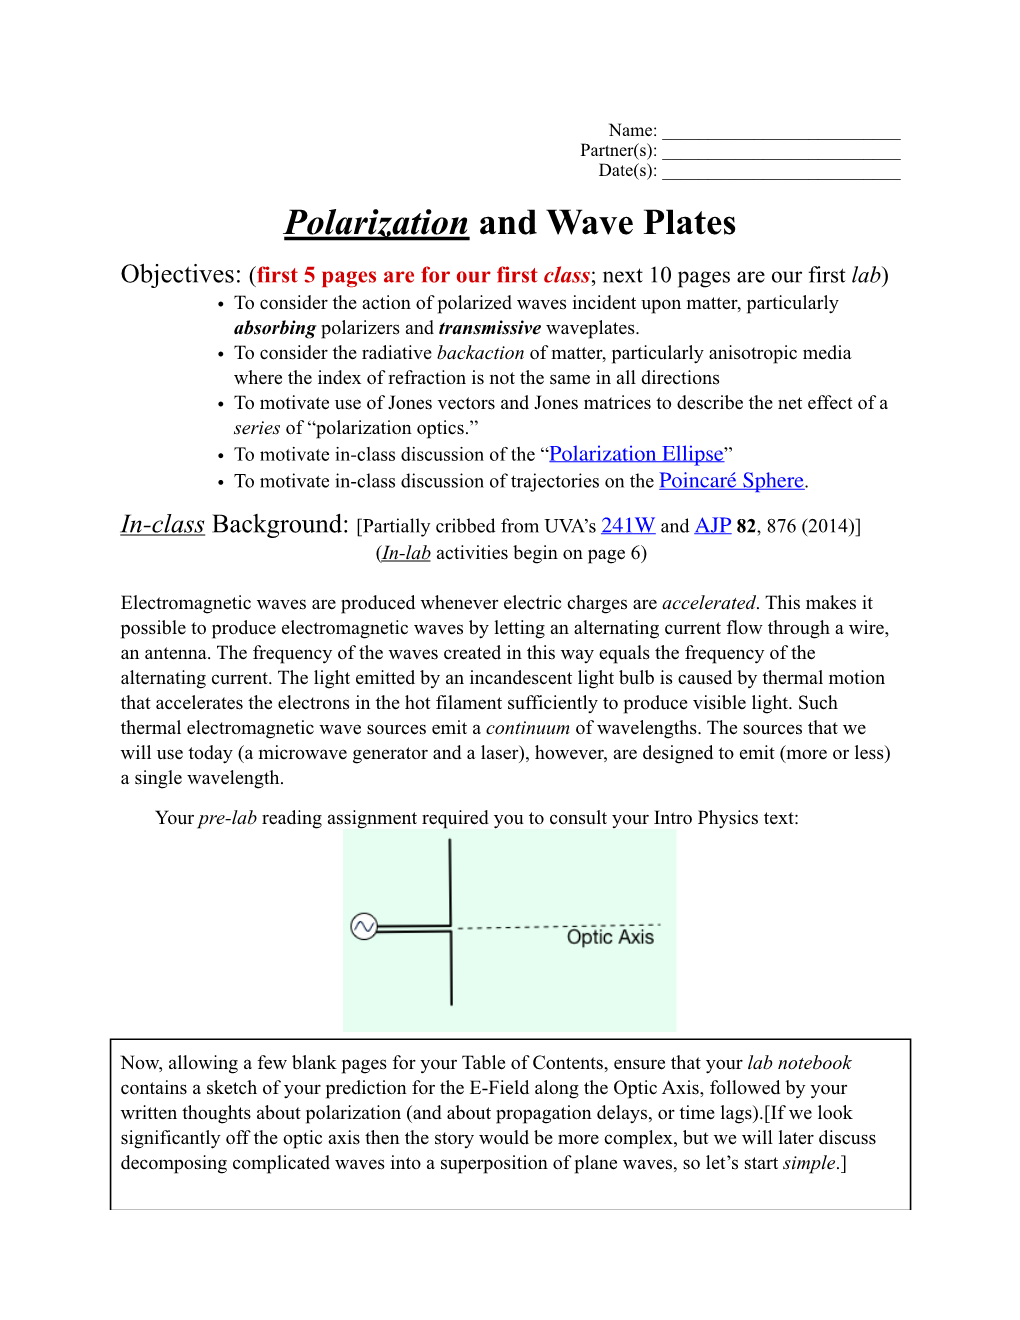 Polarization and Wave Plates